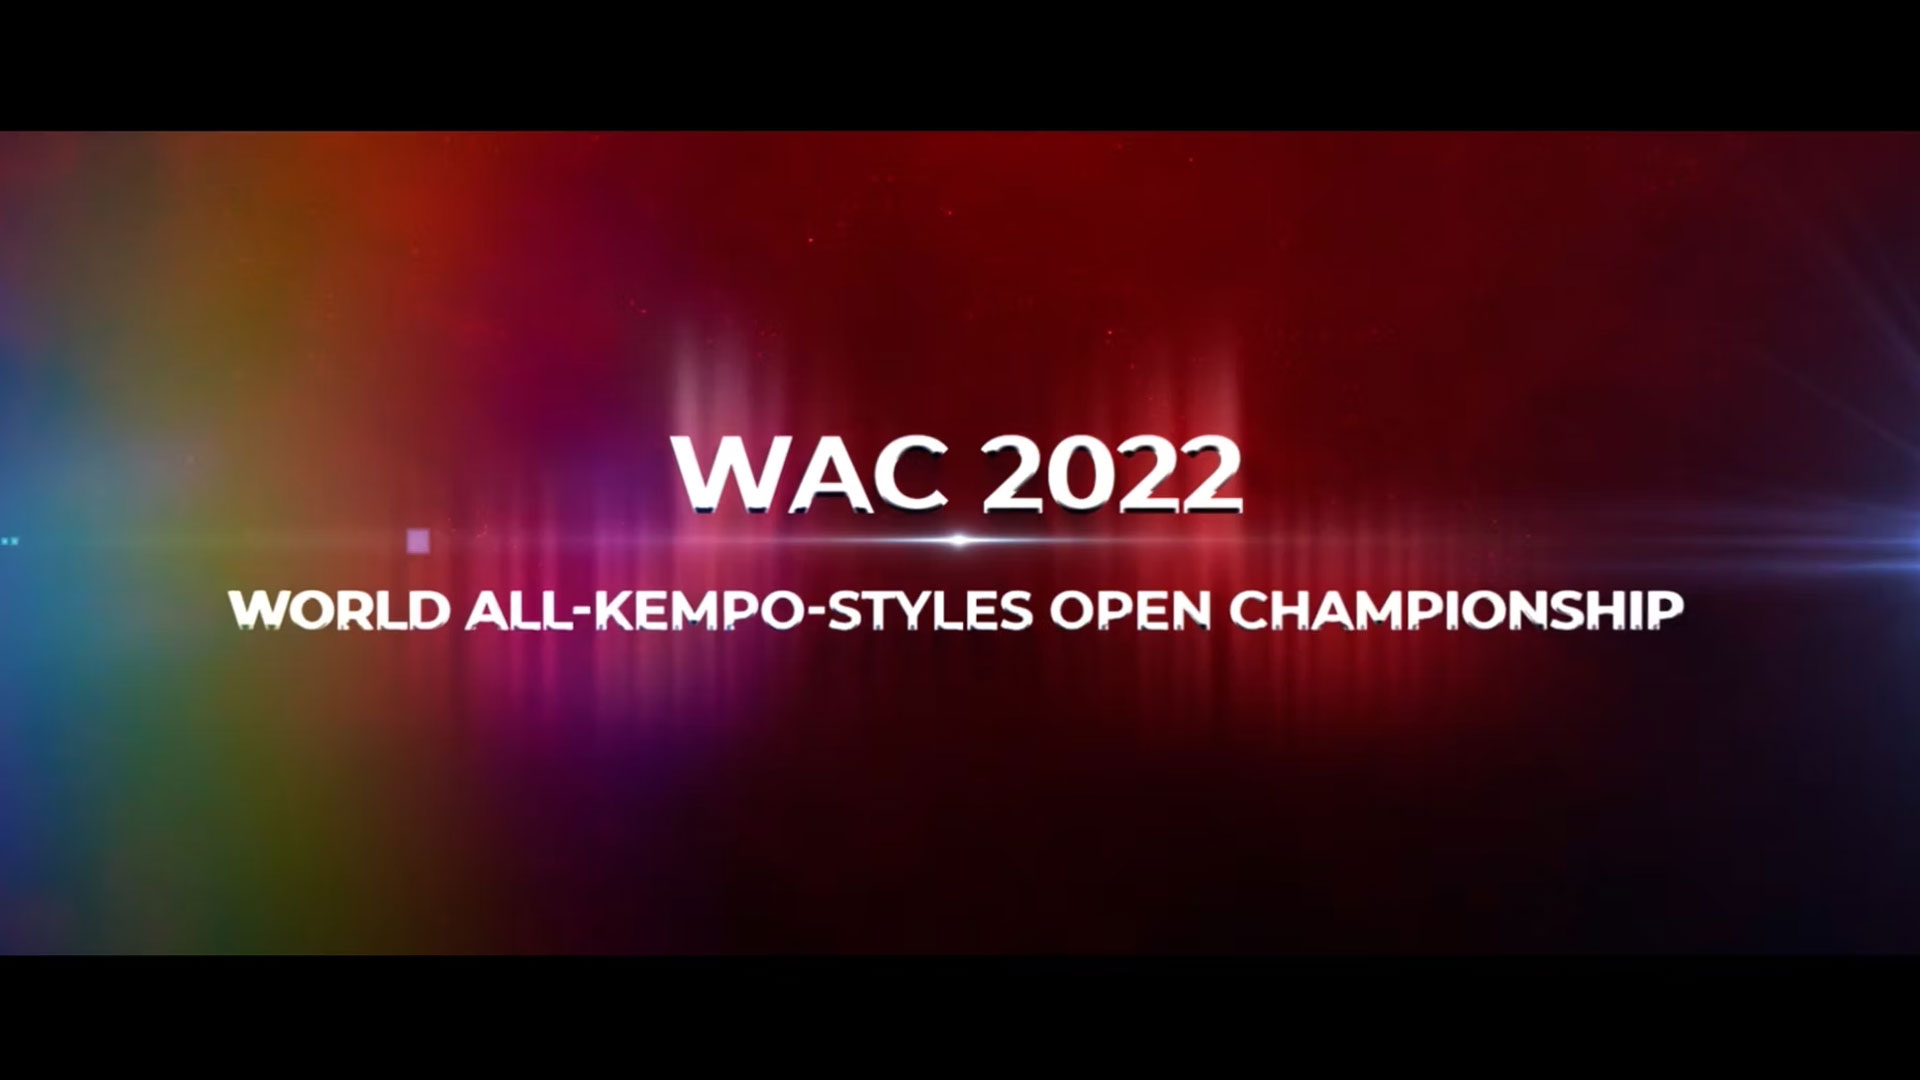 WAC 2022